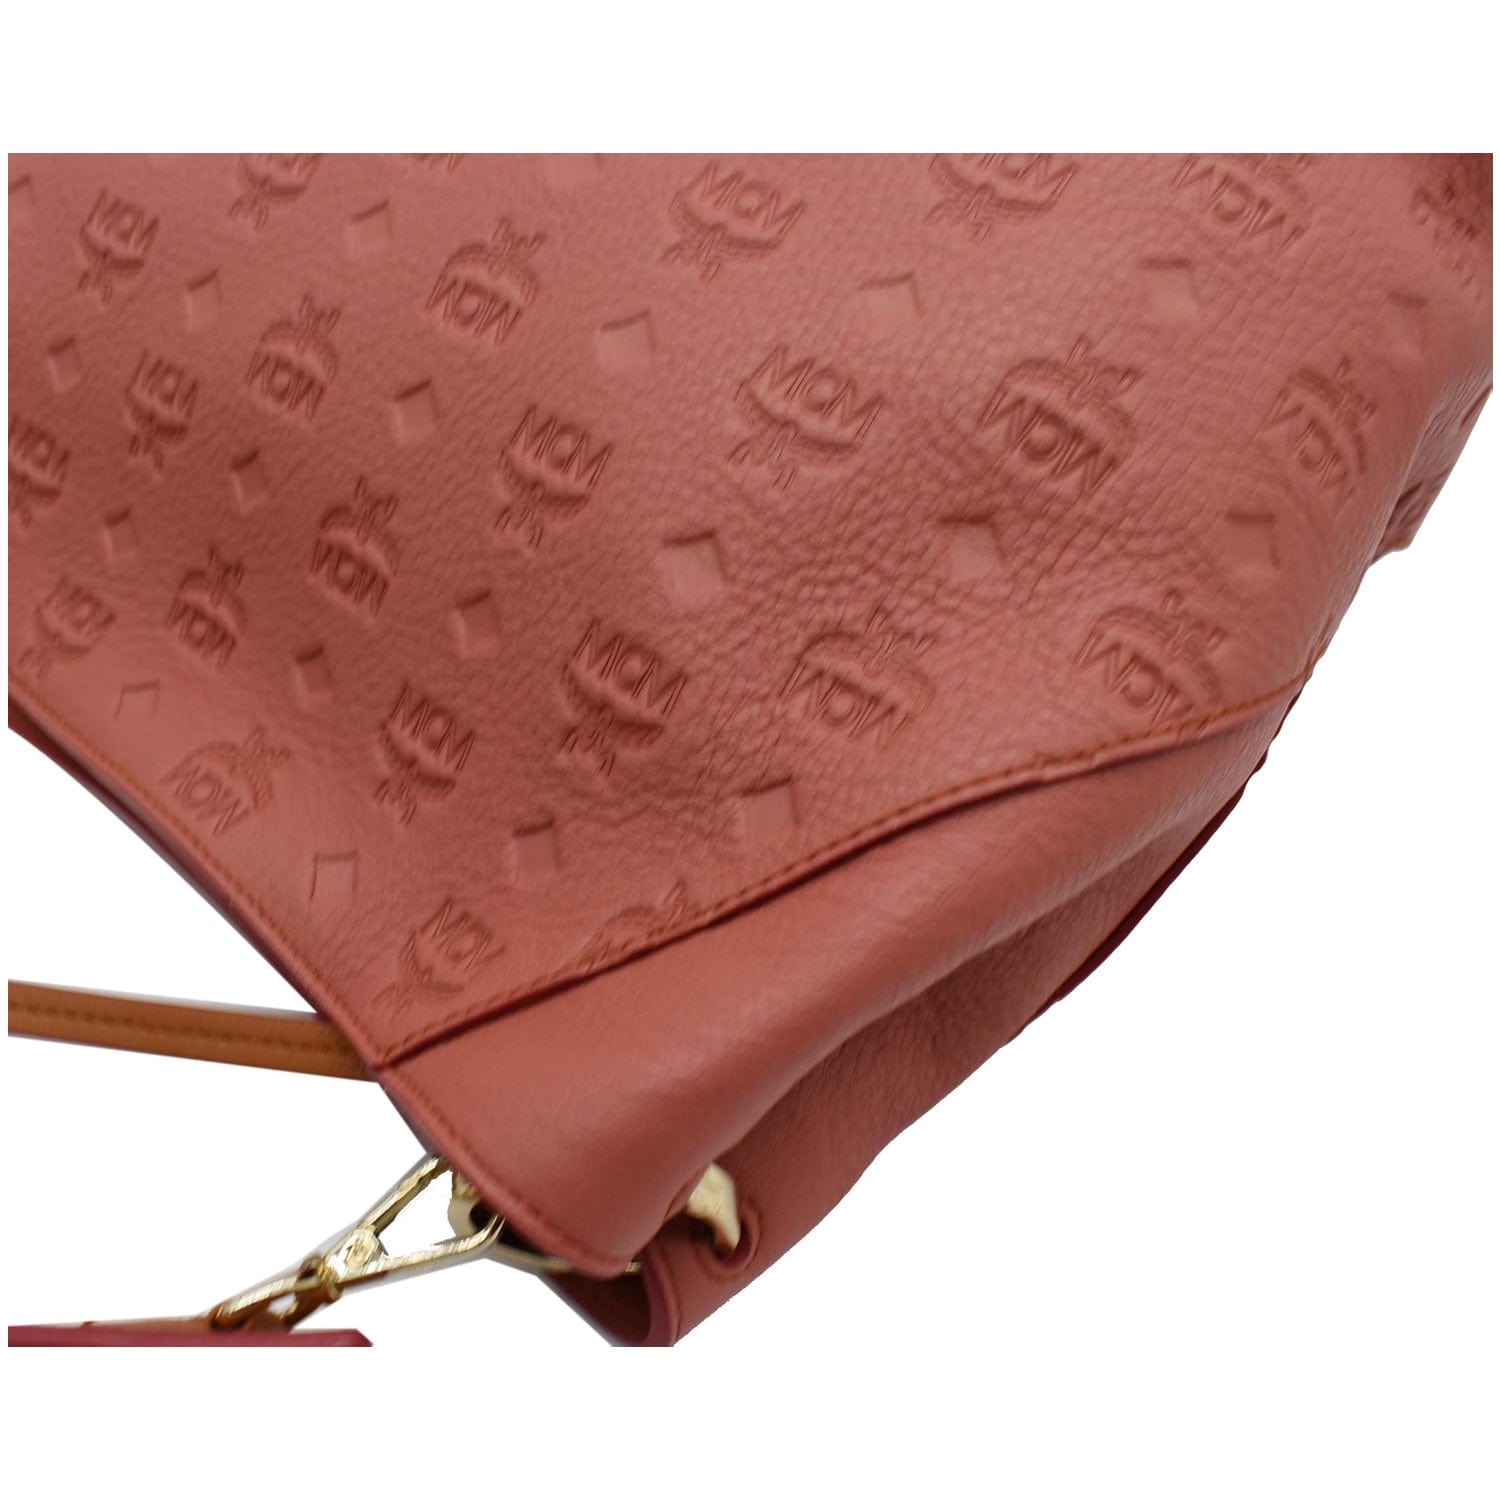 MCM Medium Klara Monogram Leather Hobo Bag Brand NEW W/TAGS! Cognac+Dust  $850